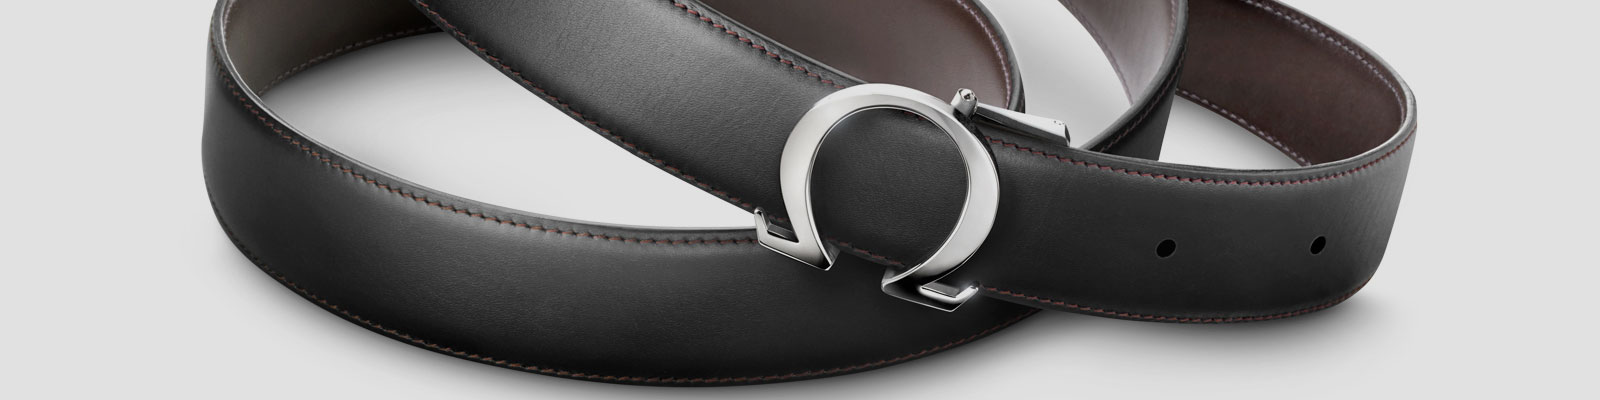 omega leather belt